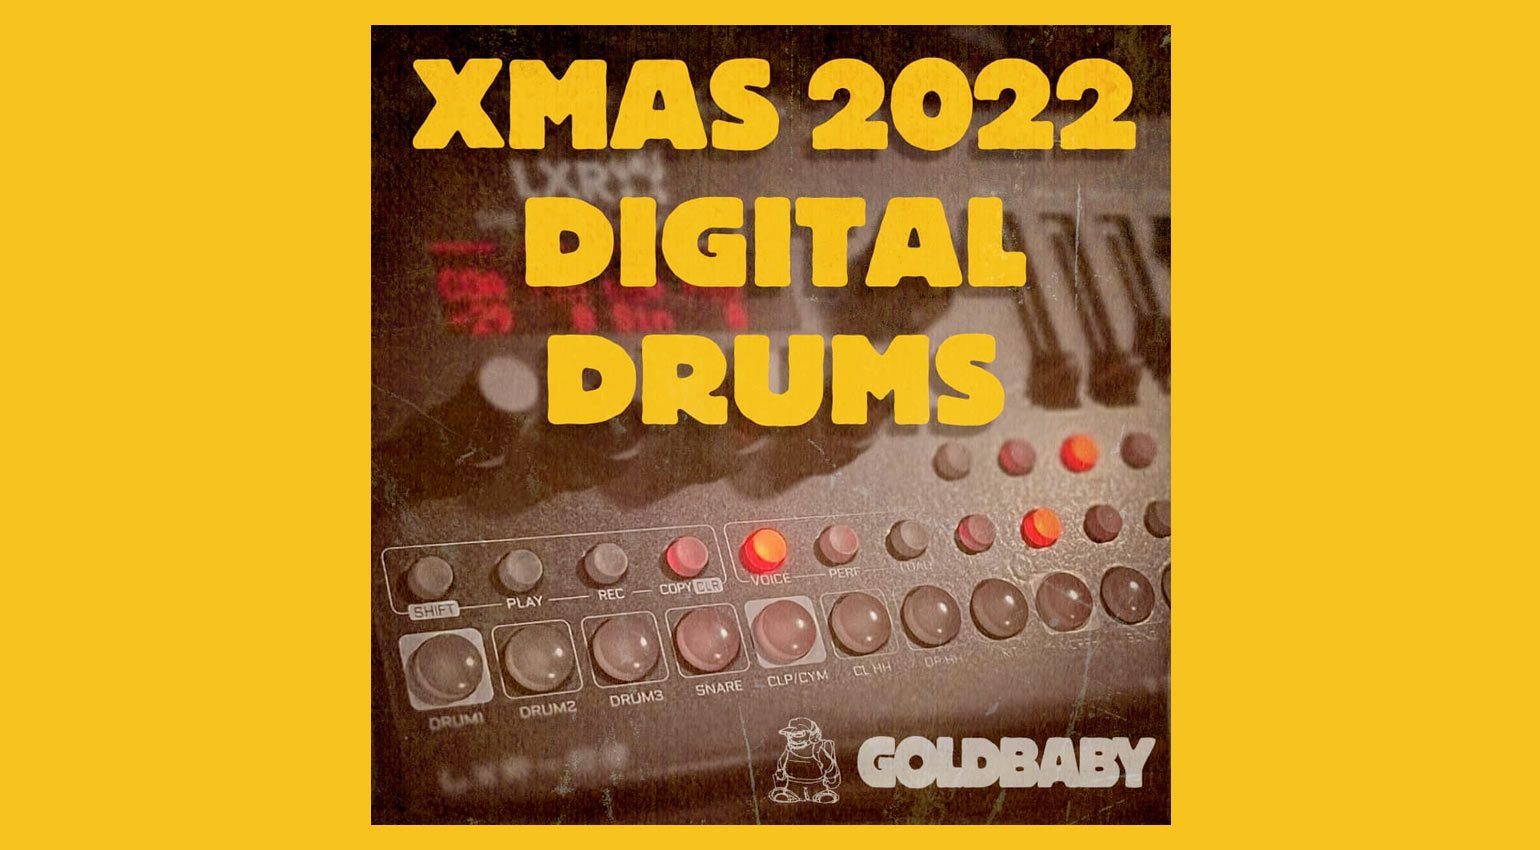 Goldbaby XMAS 2022 Digital Drums